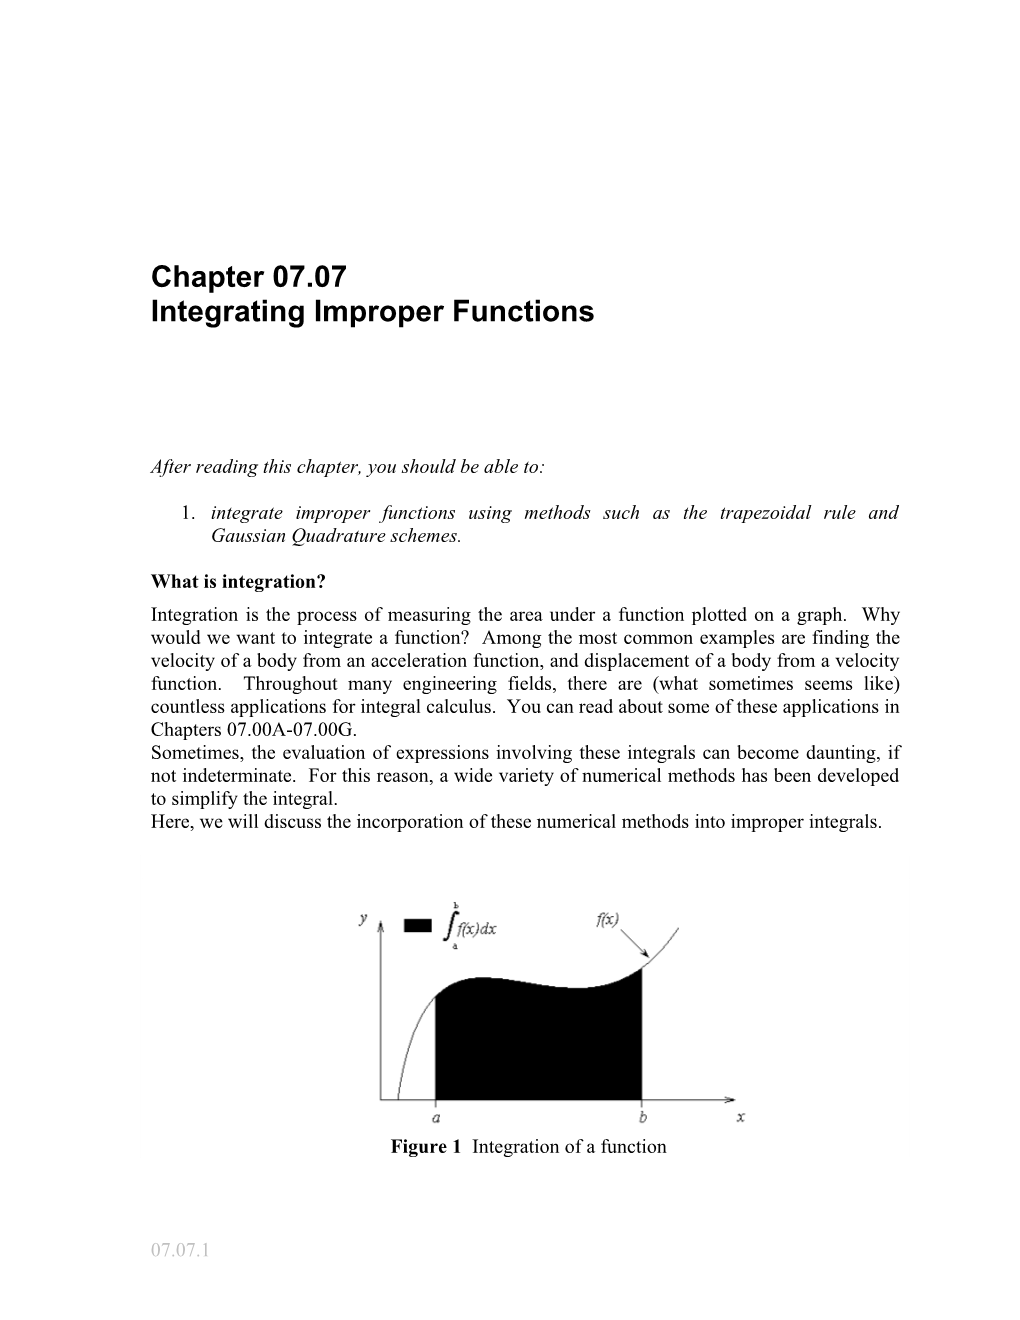 Integrating Improper Functions